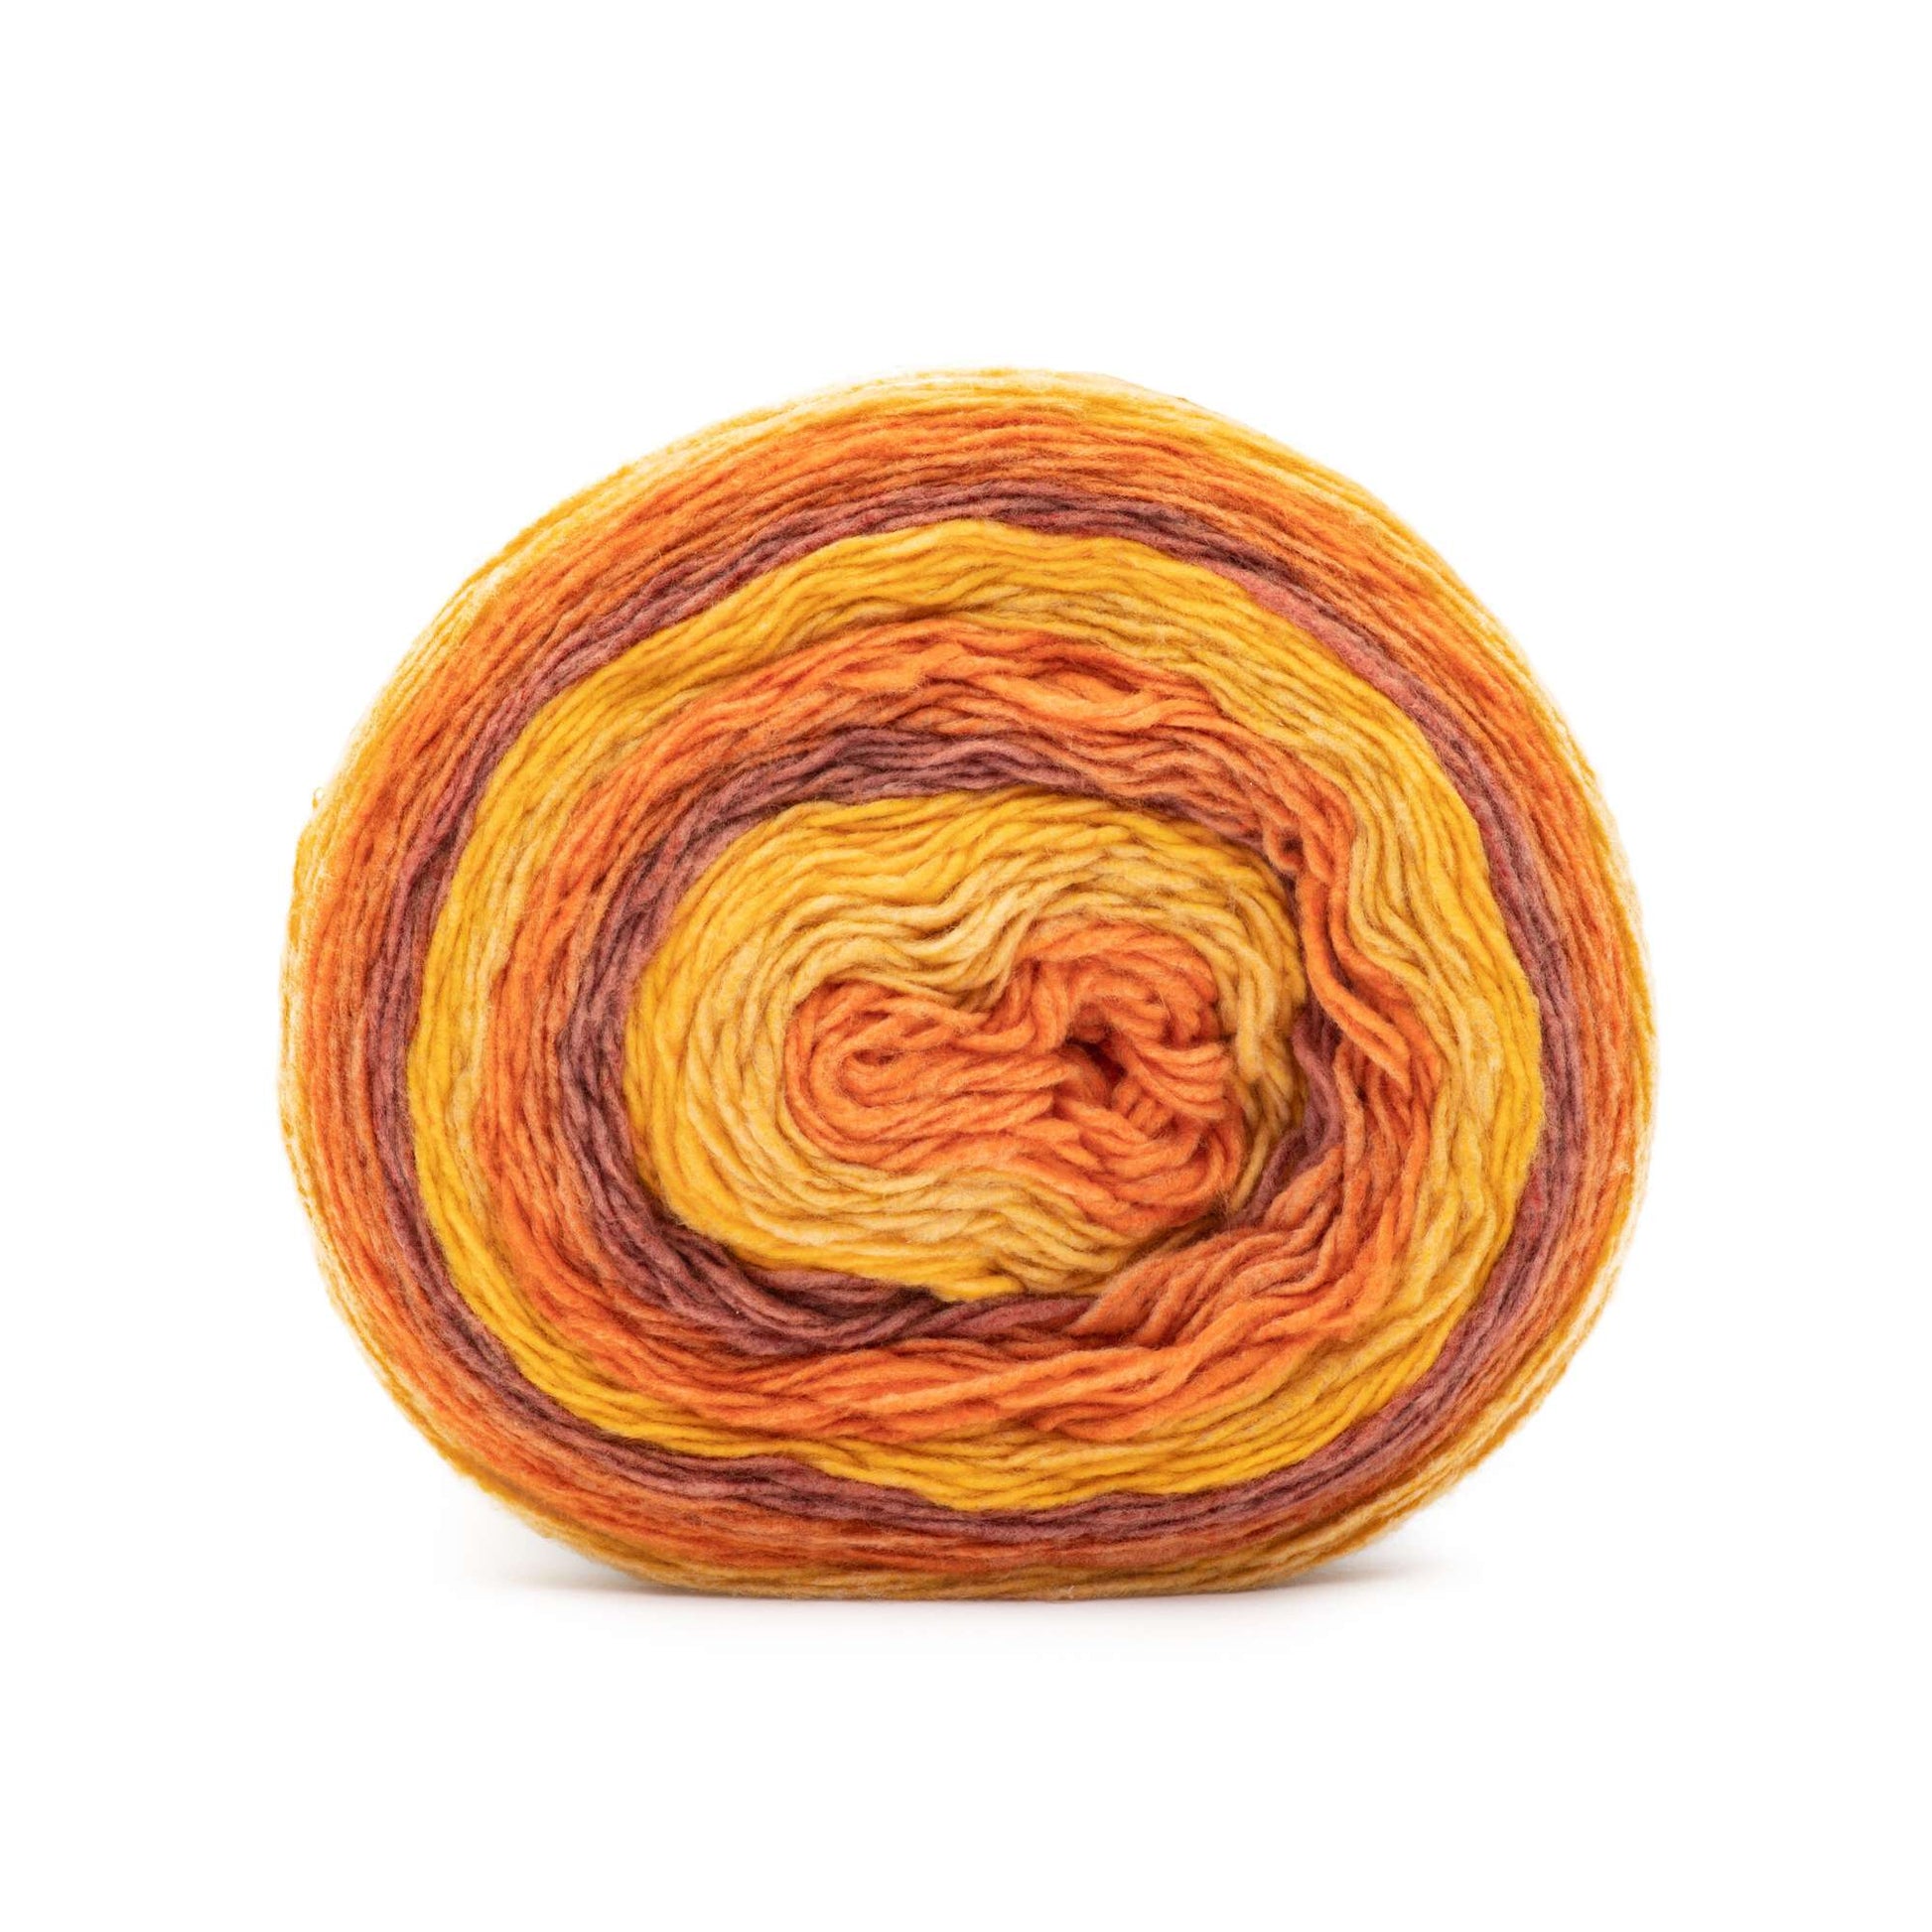 Caron Cloud Cakes Yarn - Discontinued Shades